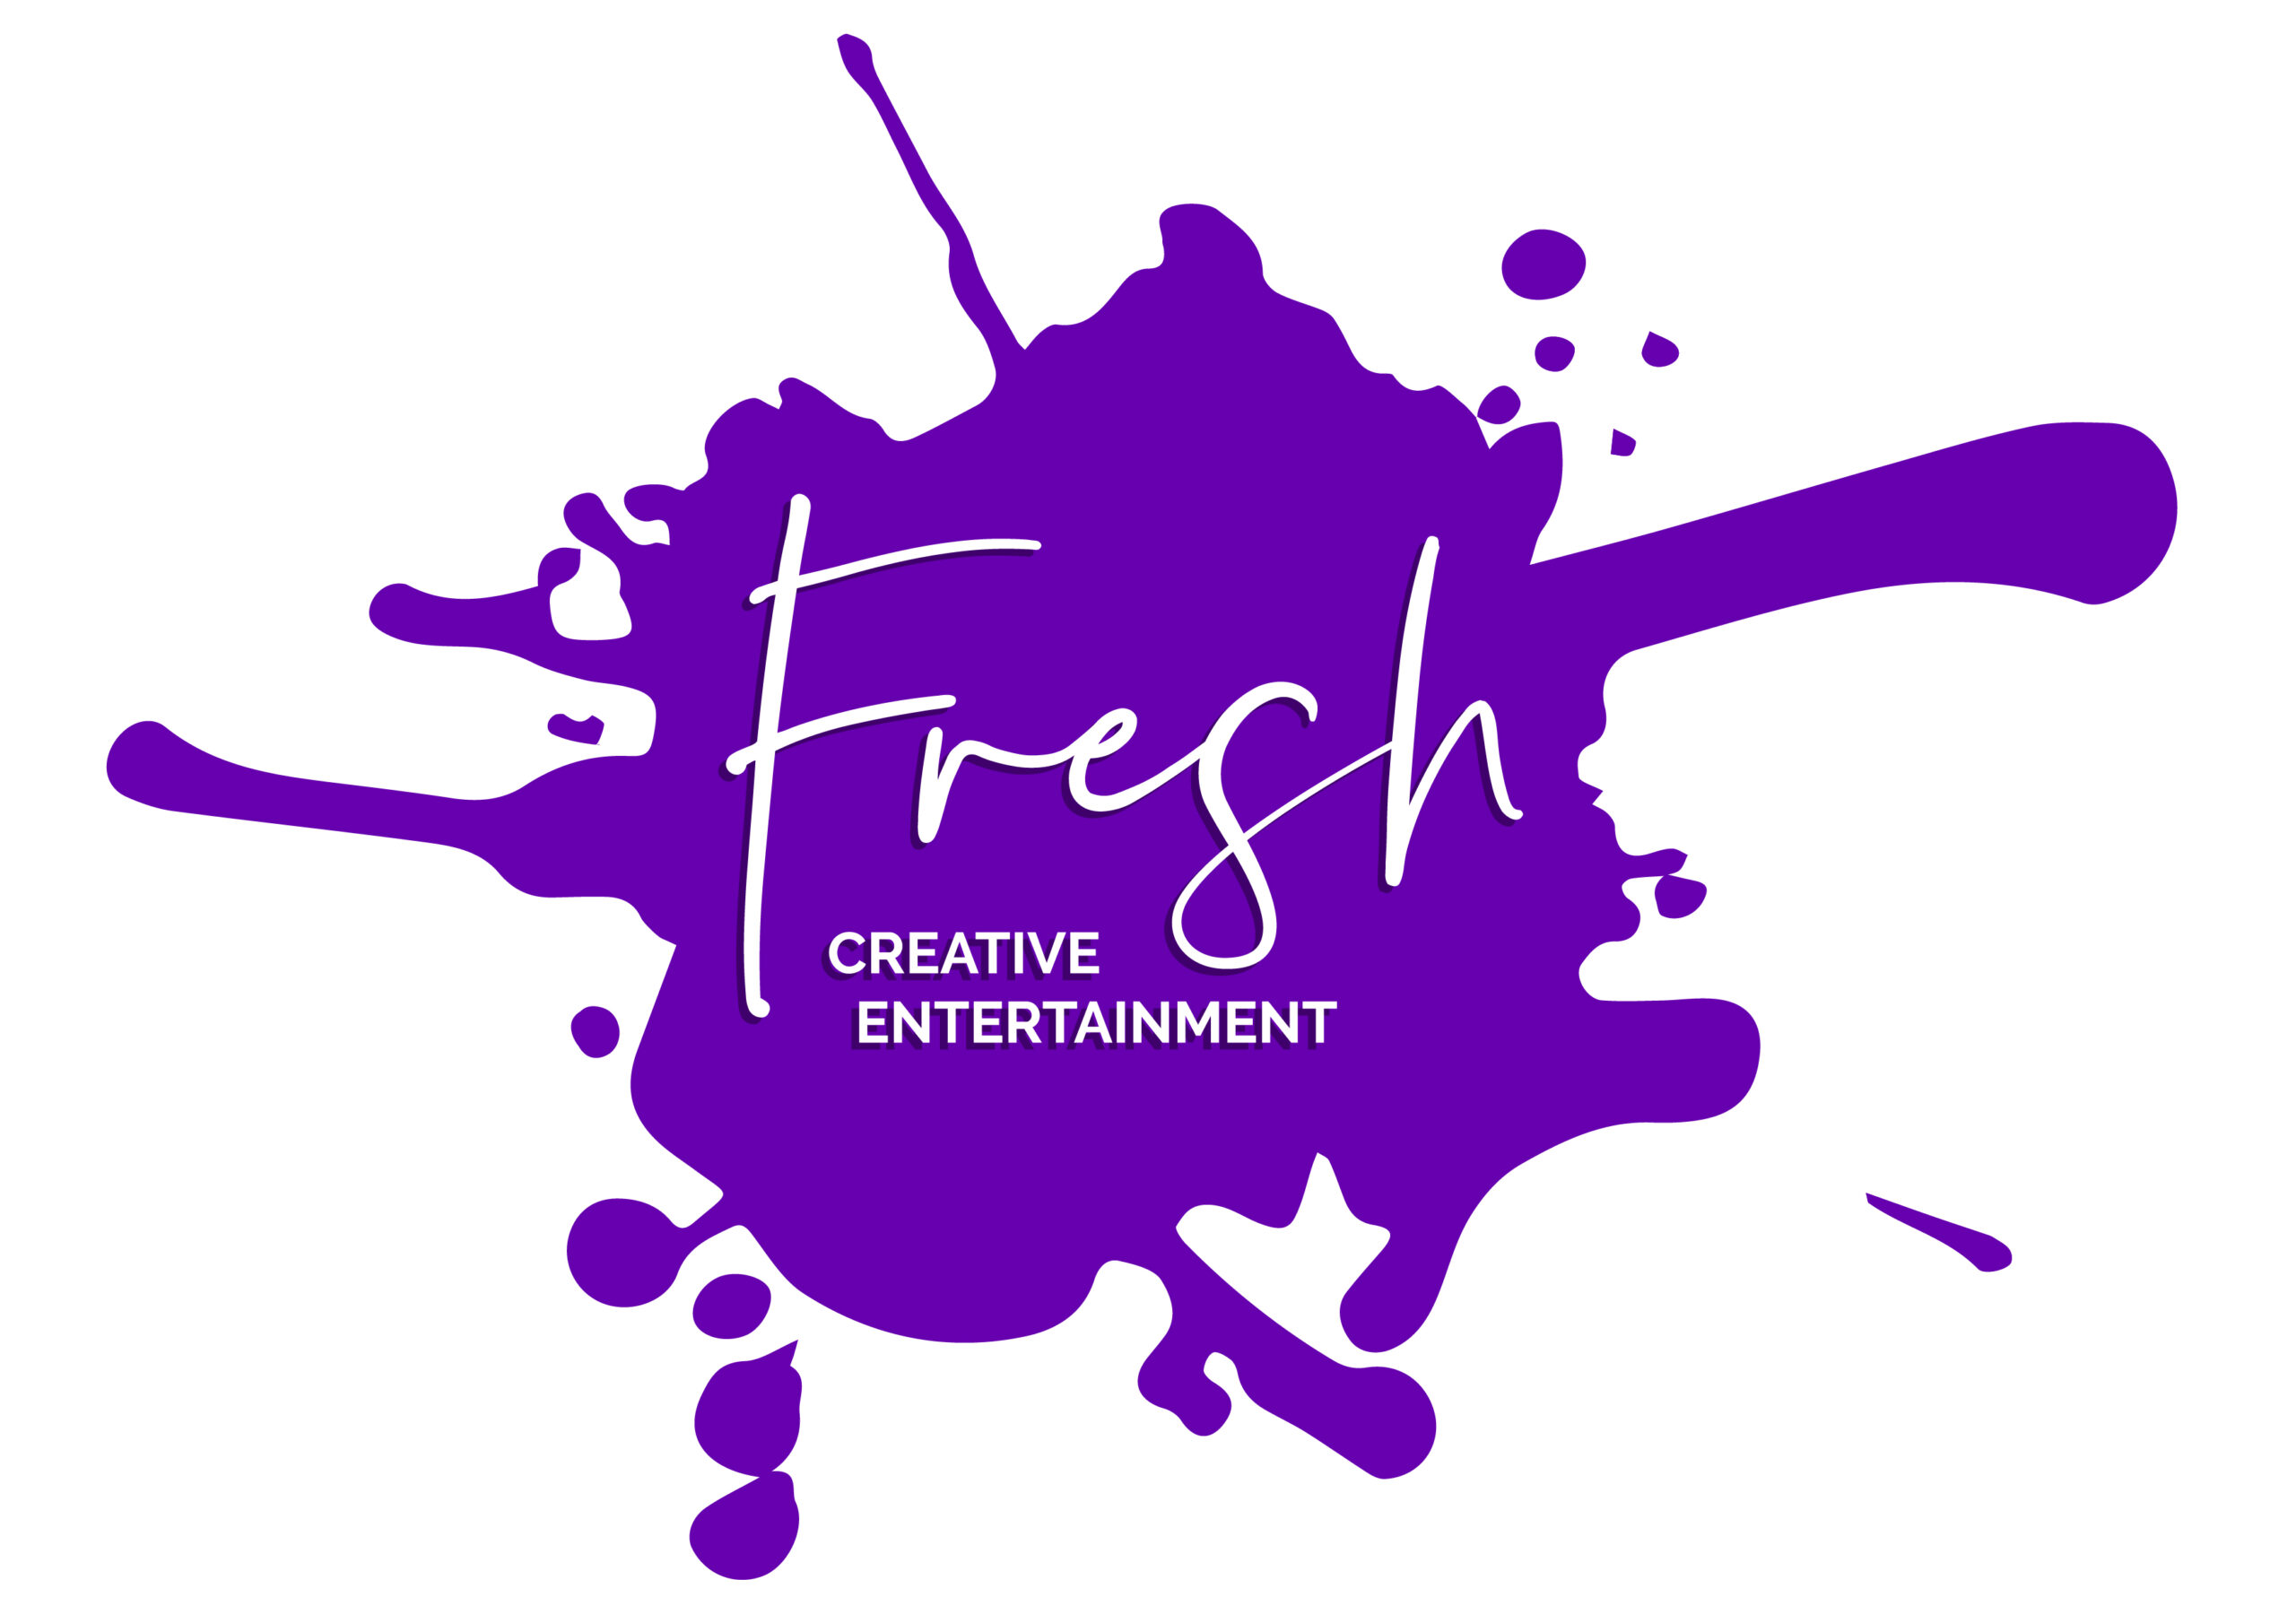 Fresh Creative Entertainment business logo